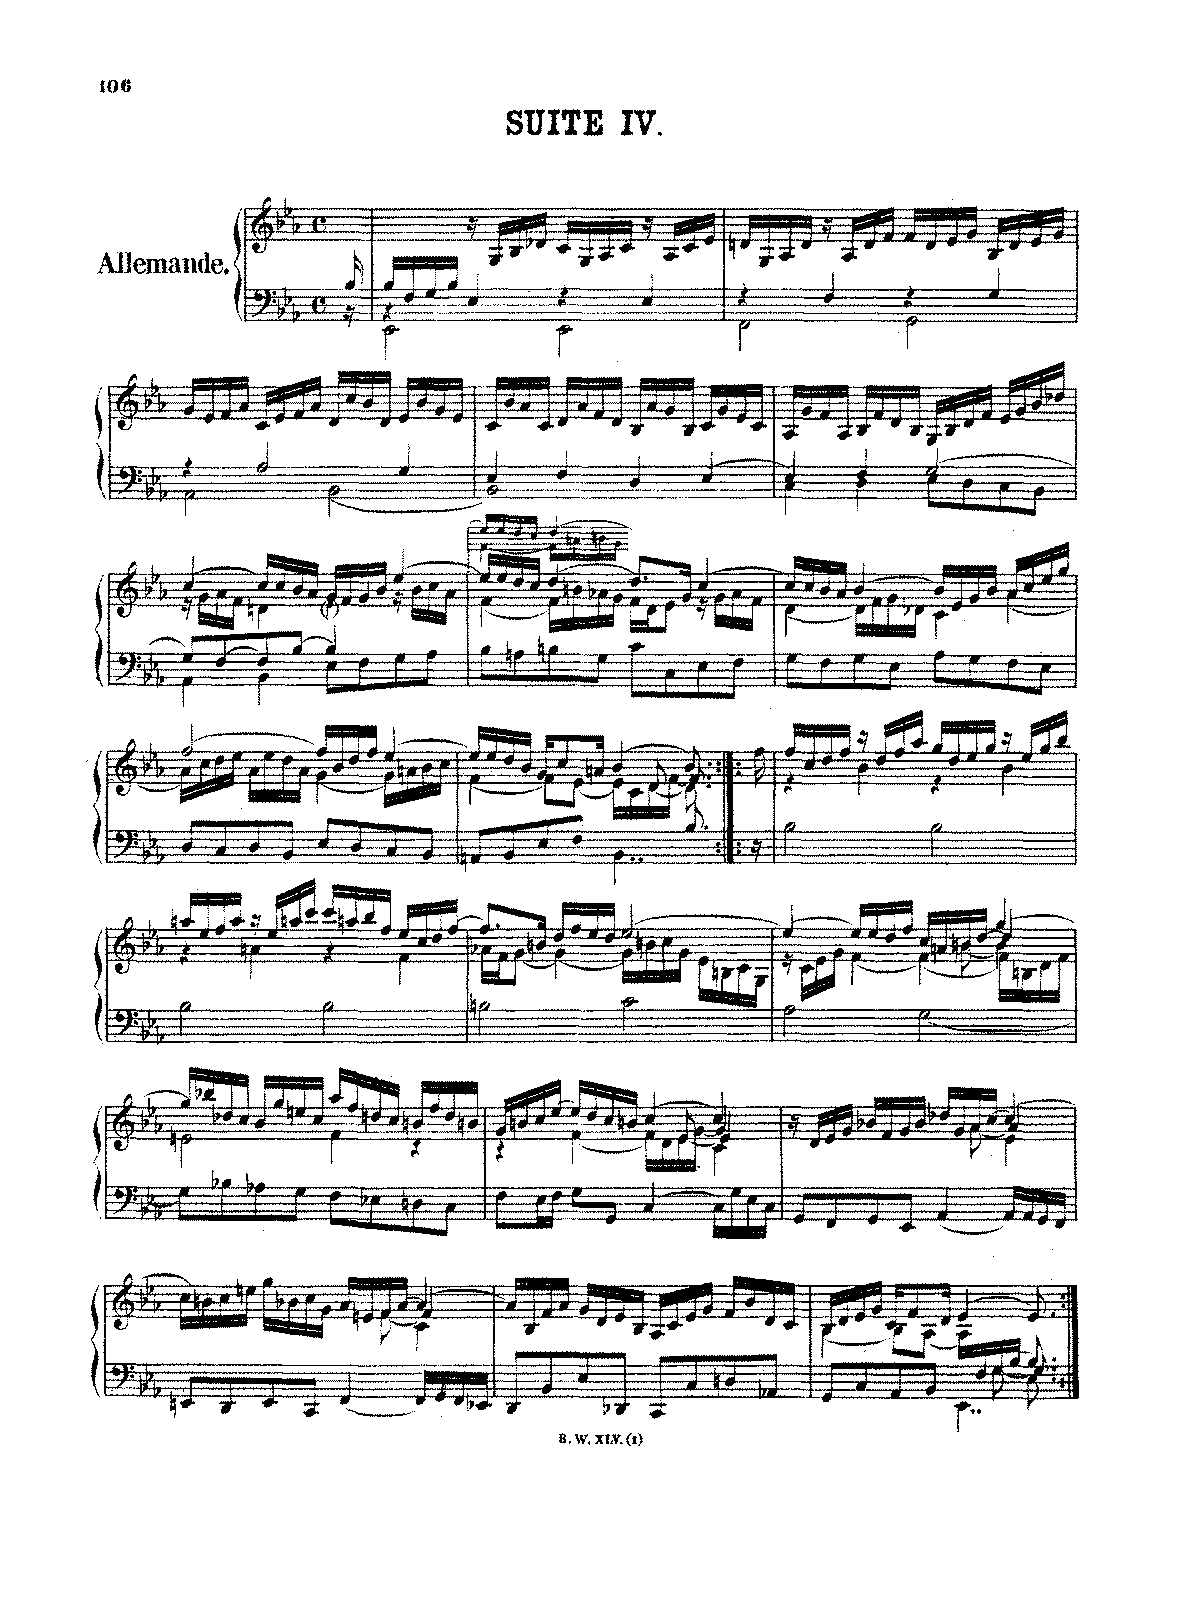 French Suite No.4 in E-flat major, BWV 815 (Bach, Johann Sebastian) - IMSLP